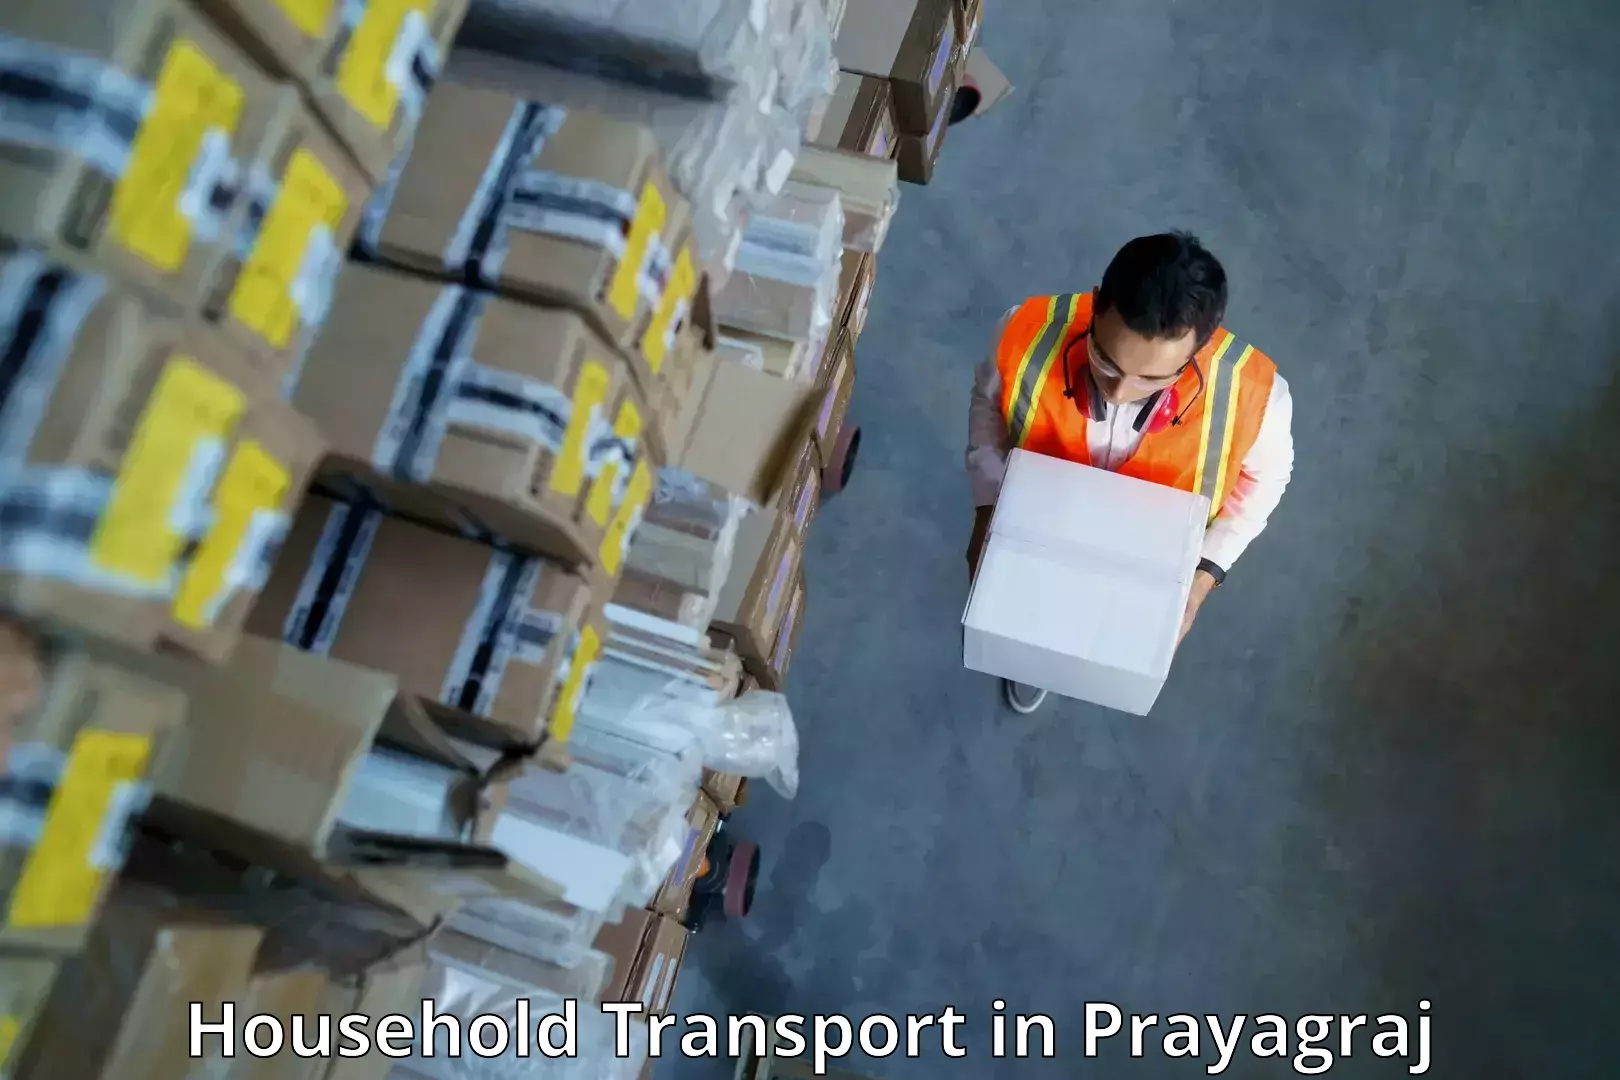 Household transport solutions in Prayagraj